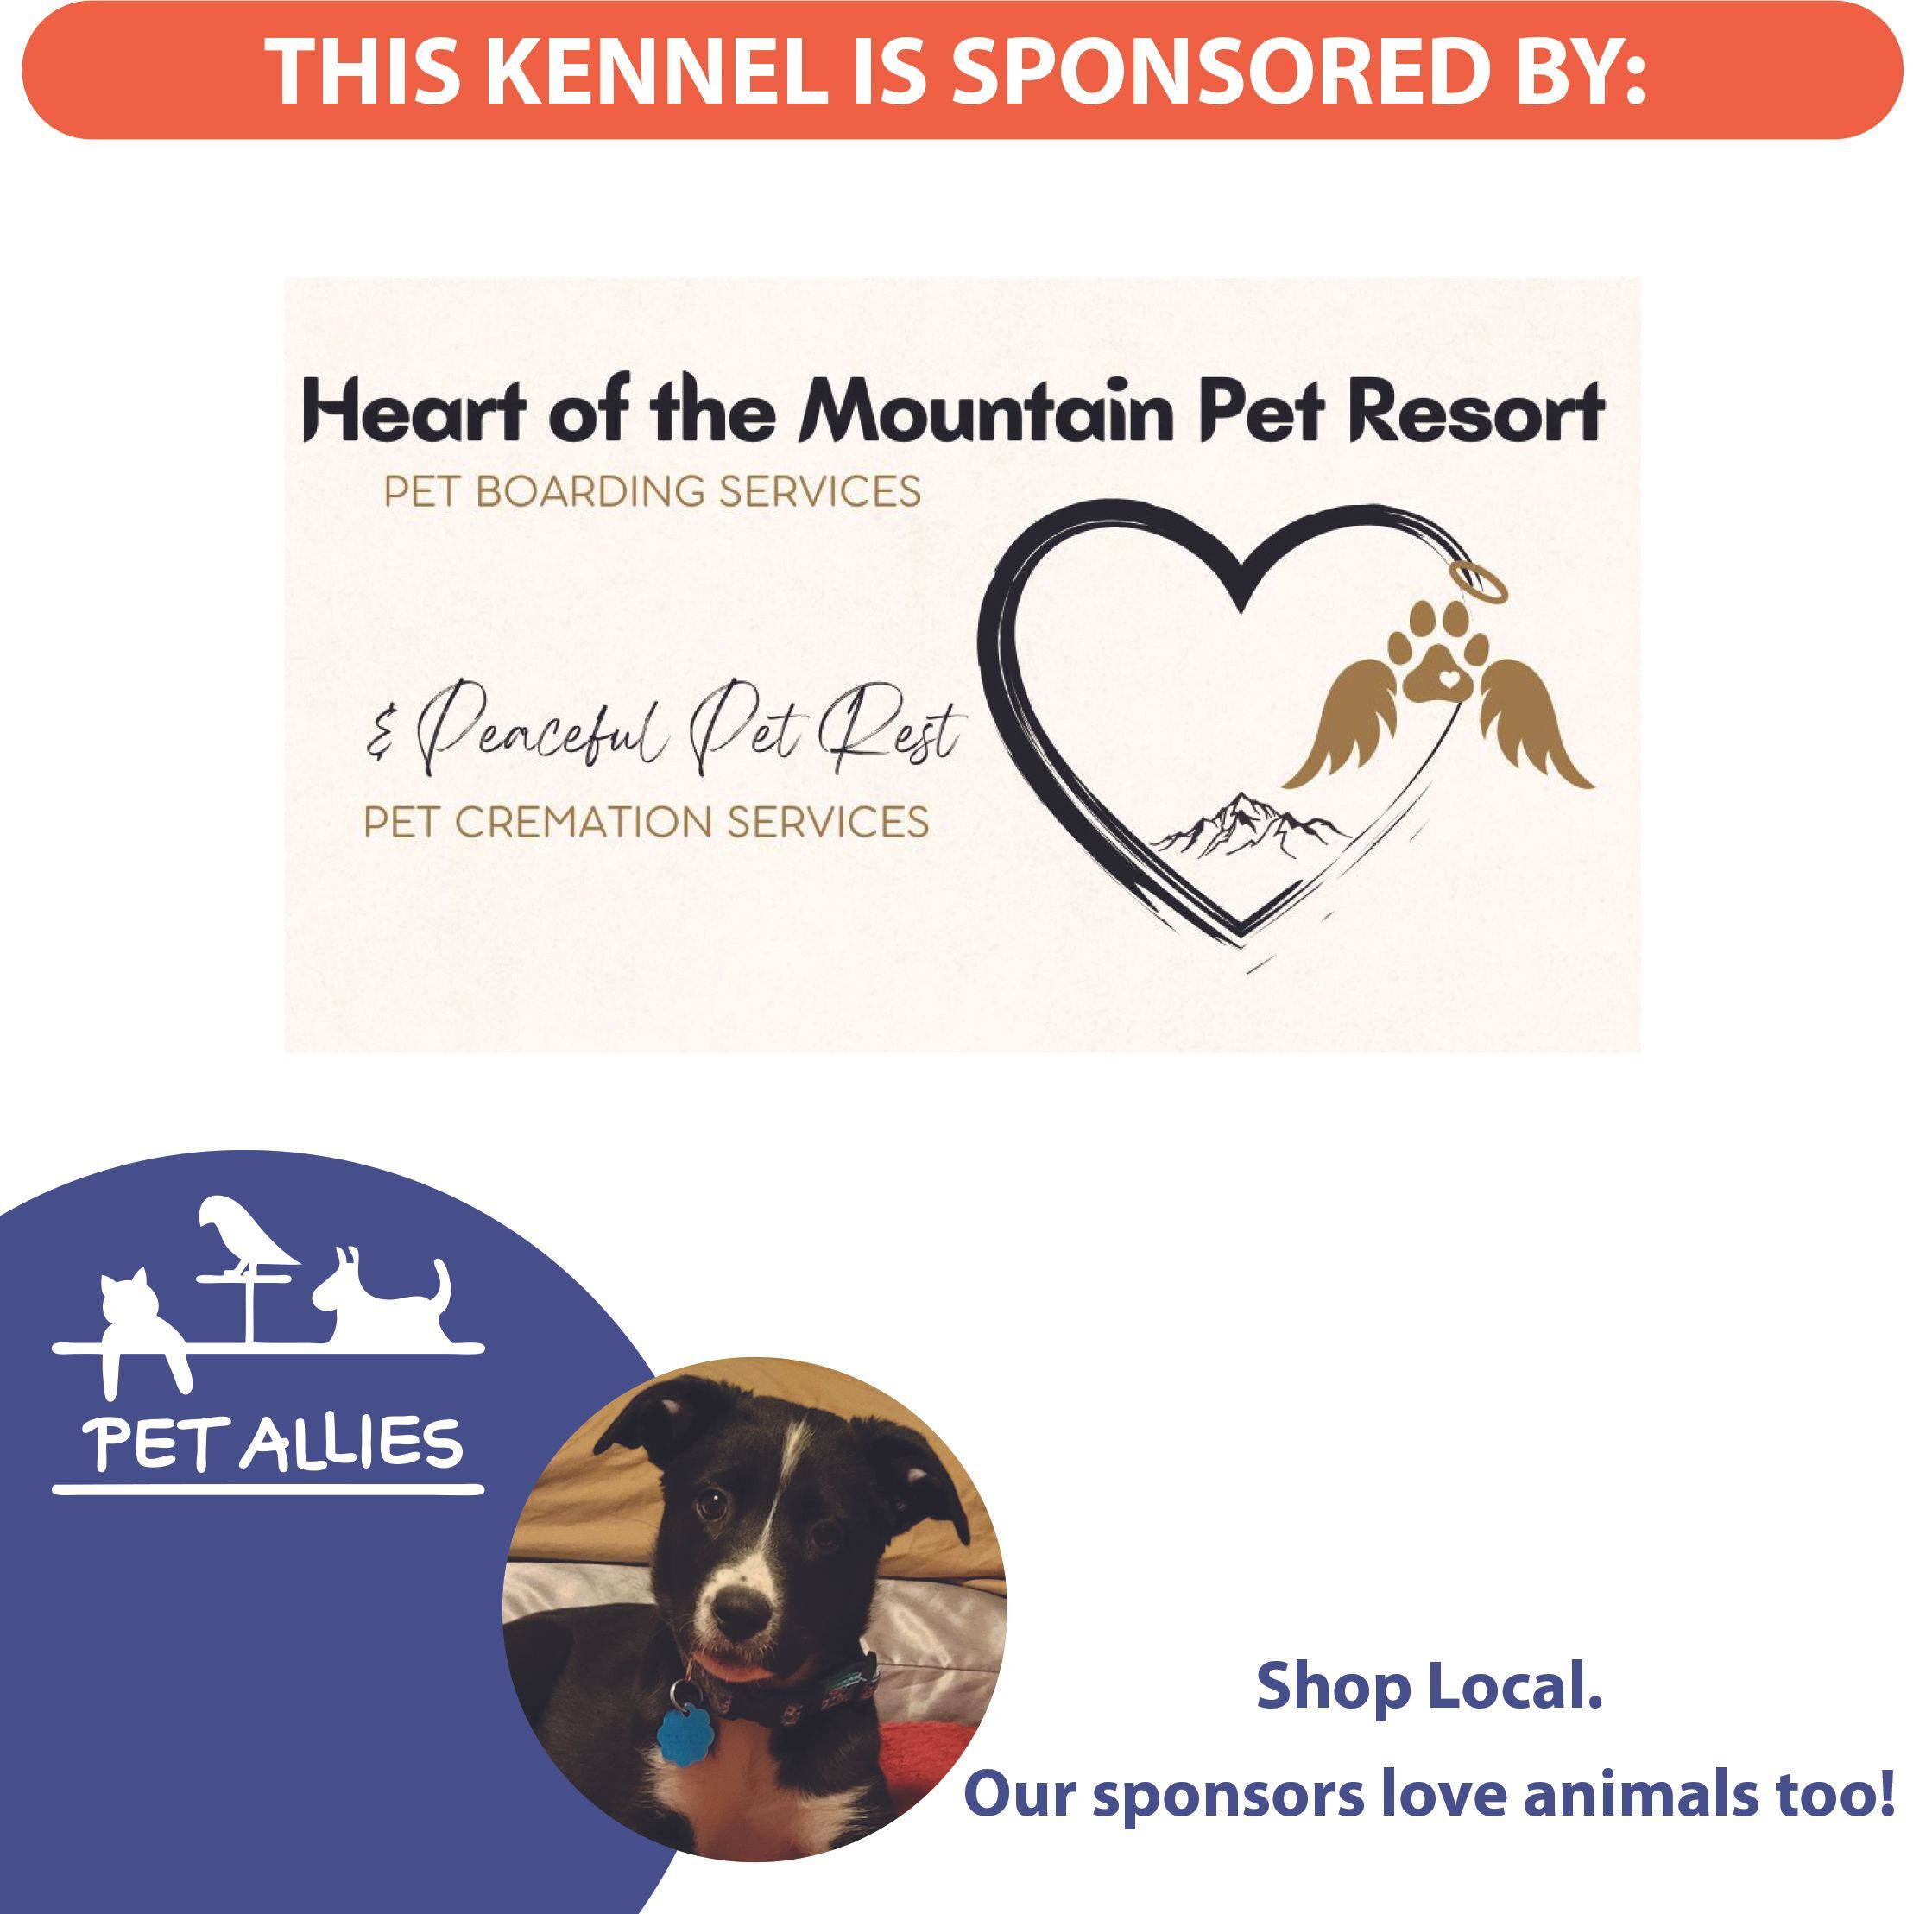 Heart of the Mountain Pet Resort